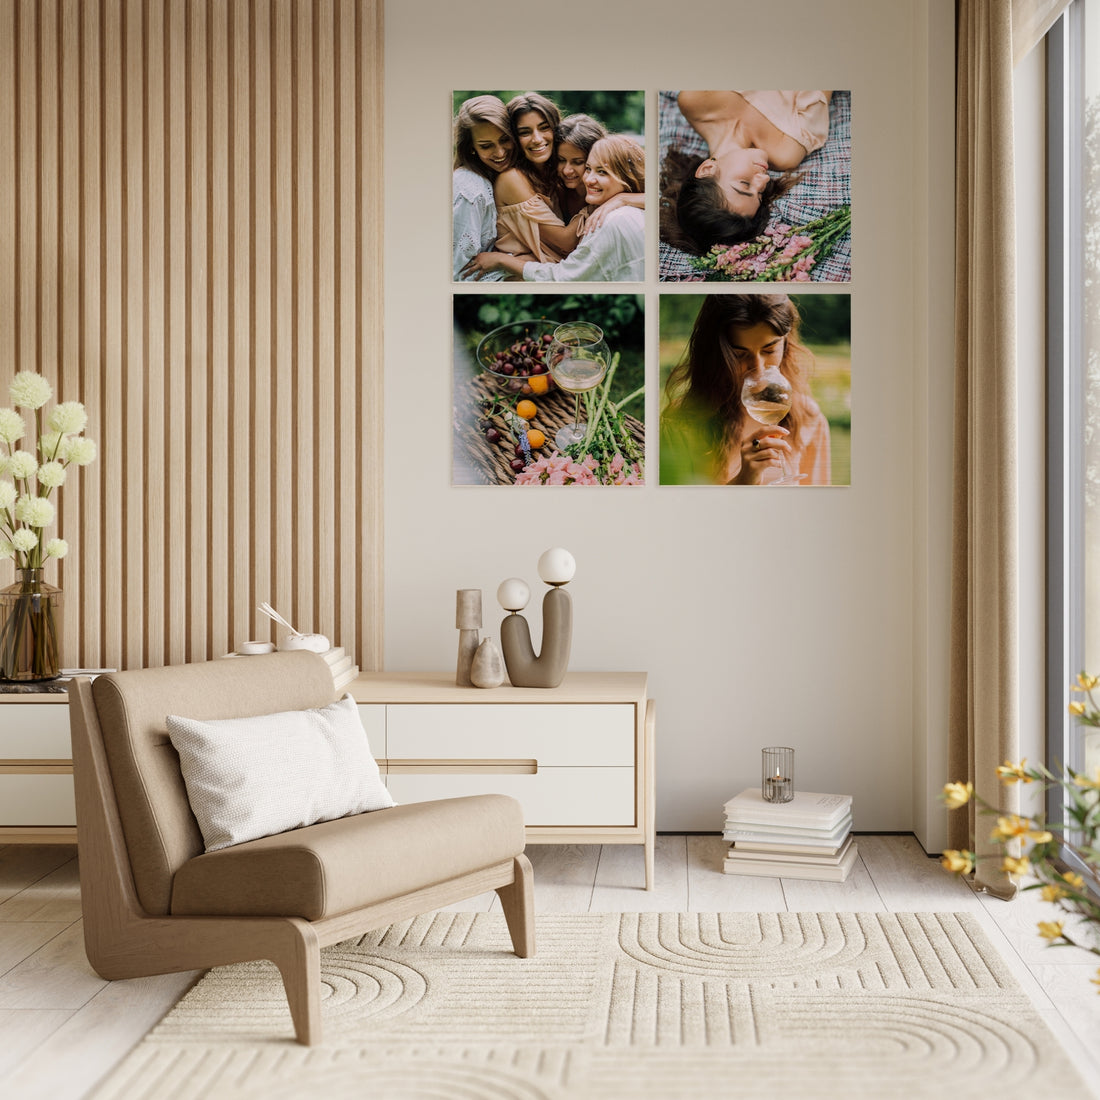 Personalised Set of 4 Wooden Photo Block Square, Custom UV Print Image Wall Hanging Display, Memory Frame Tile Gallery, Housewarming Gift